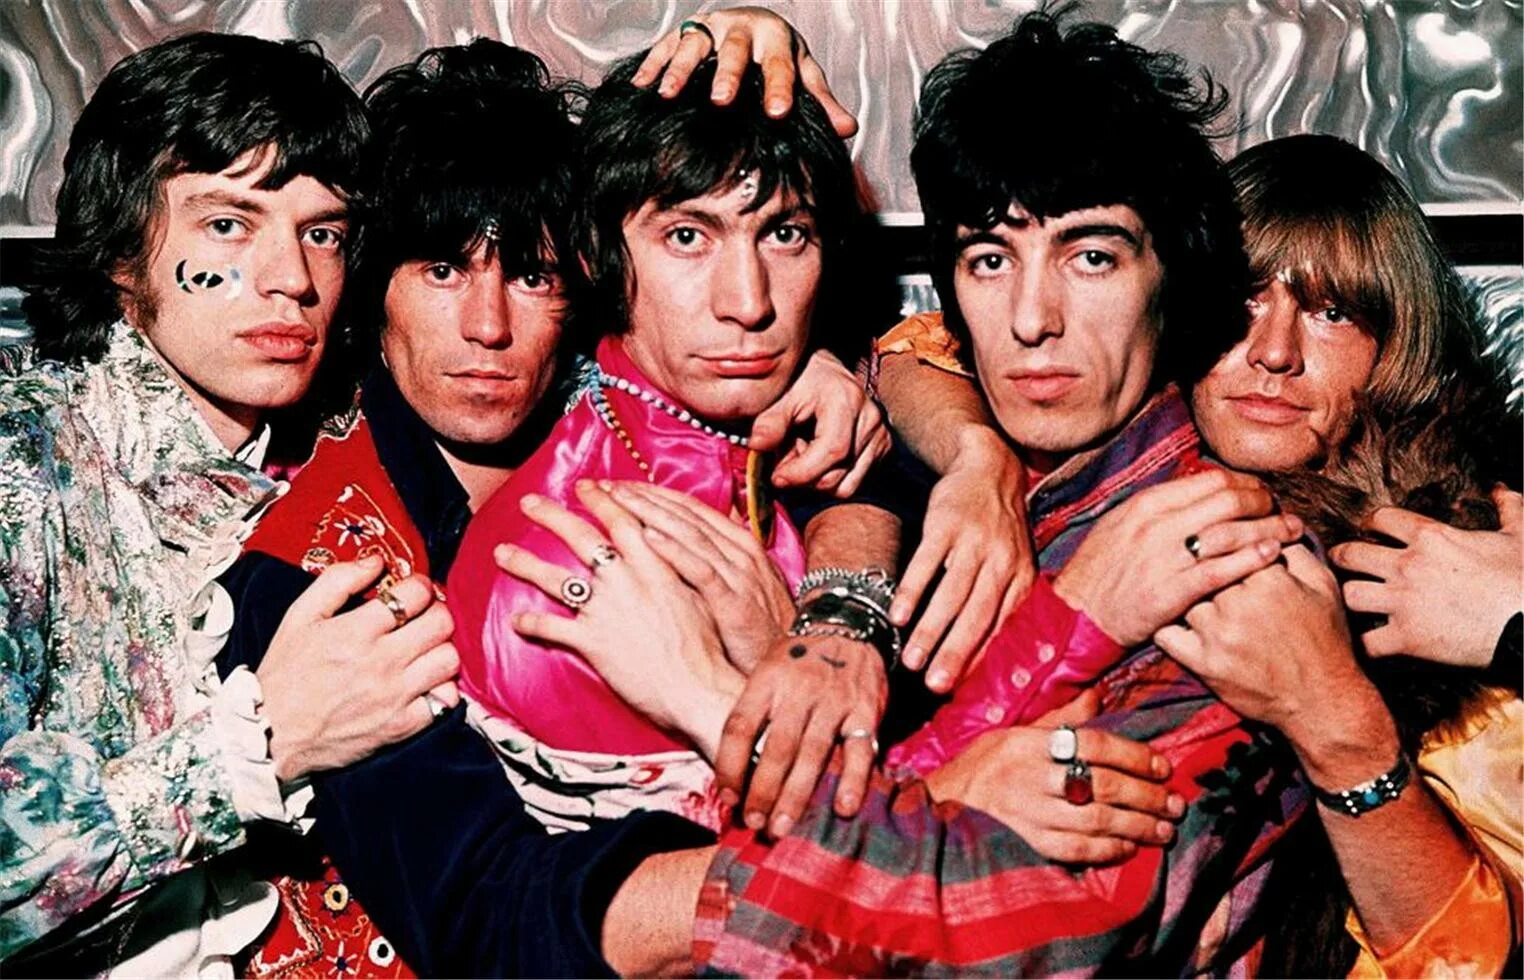 70 группа музыка. Роллинг стоунз 1967. Группа the Rolling Stones 1967. Роллинг стоунз в молодости. Группа the Rolling Stones молодые.